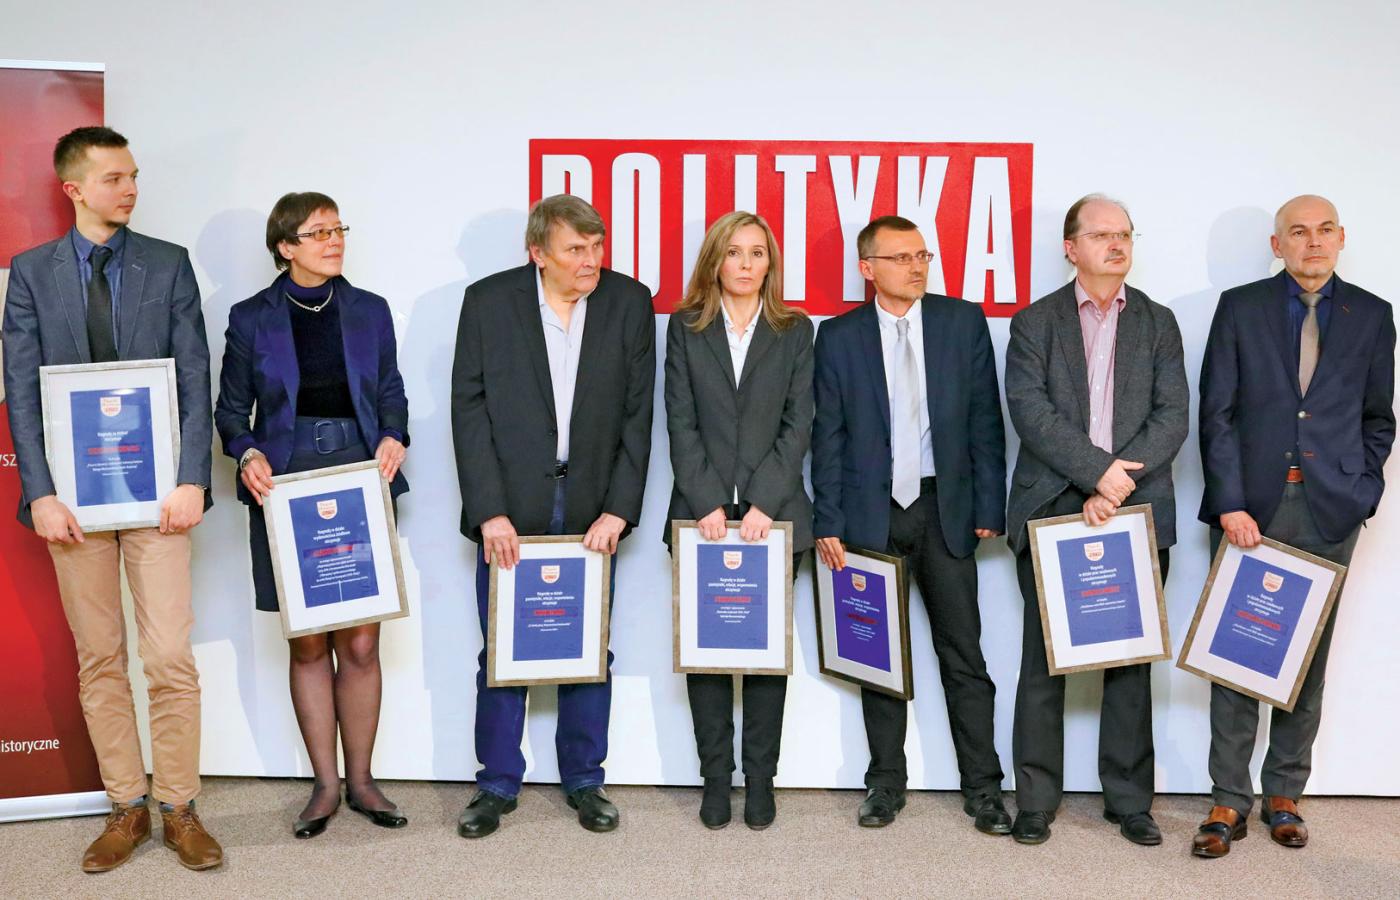 Nasi laureaci: Sebastian Pawlina, Elżbieta Orman, Antoni Kroh, Joanna Dufrat, Piotr Cichoracki, Dariusz Jarosz i Grzegorz Miernik